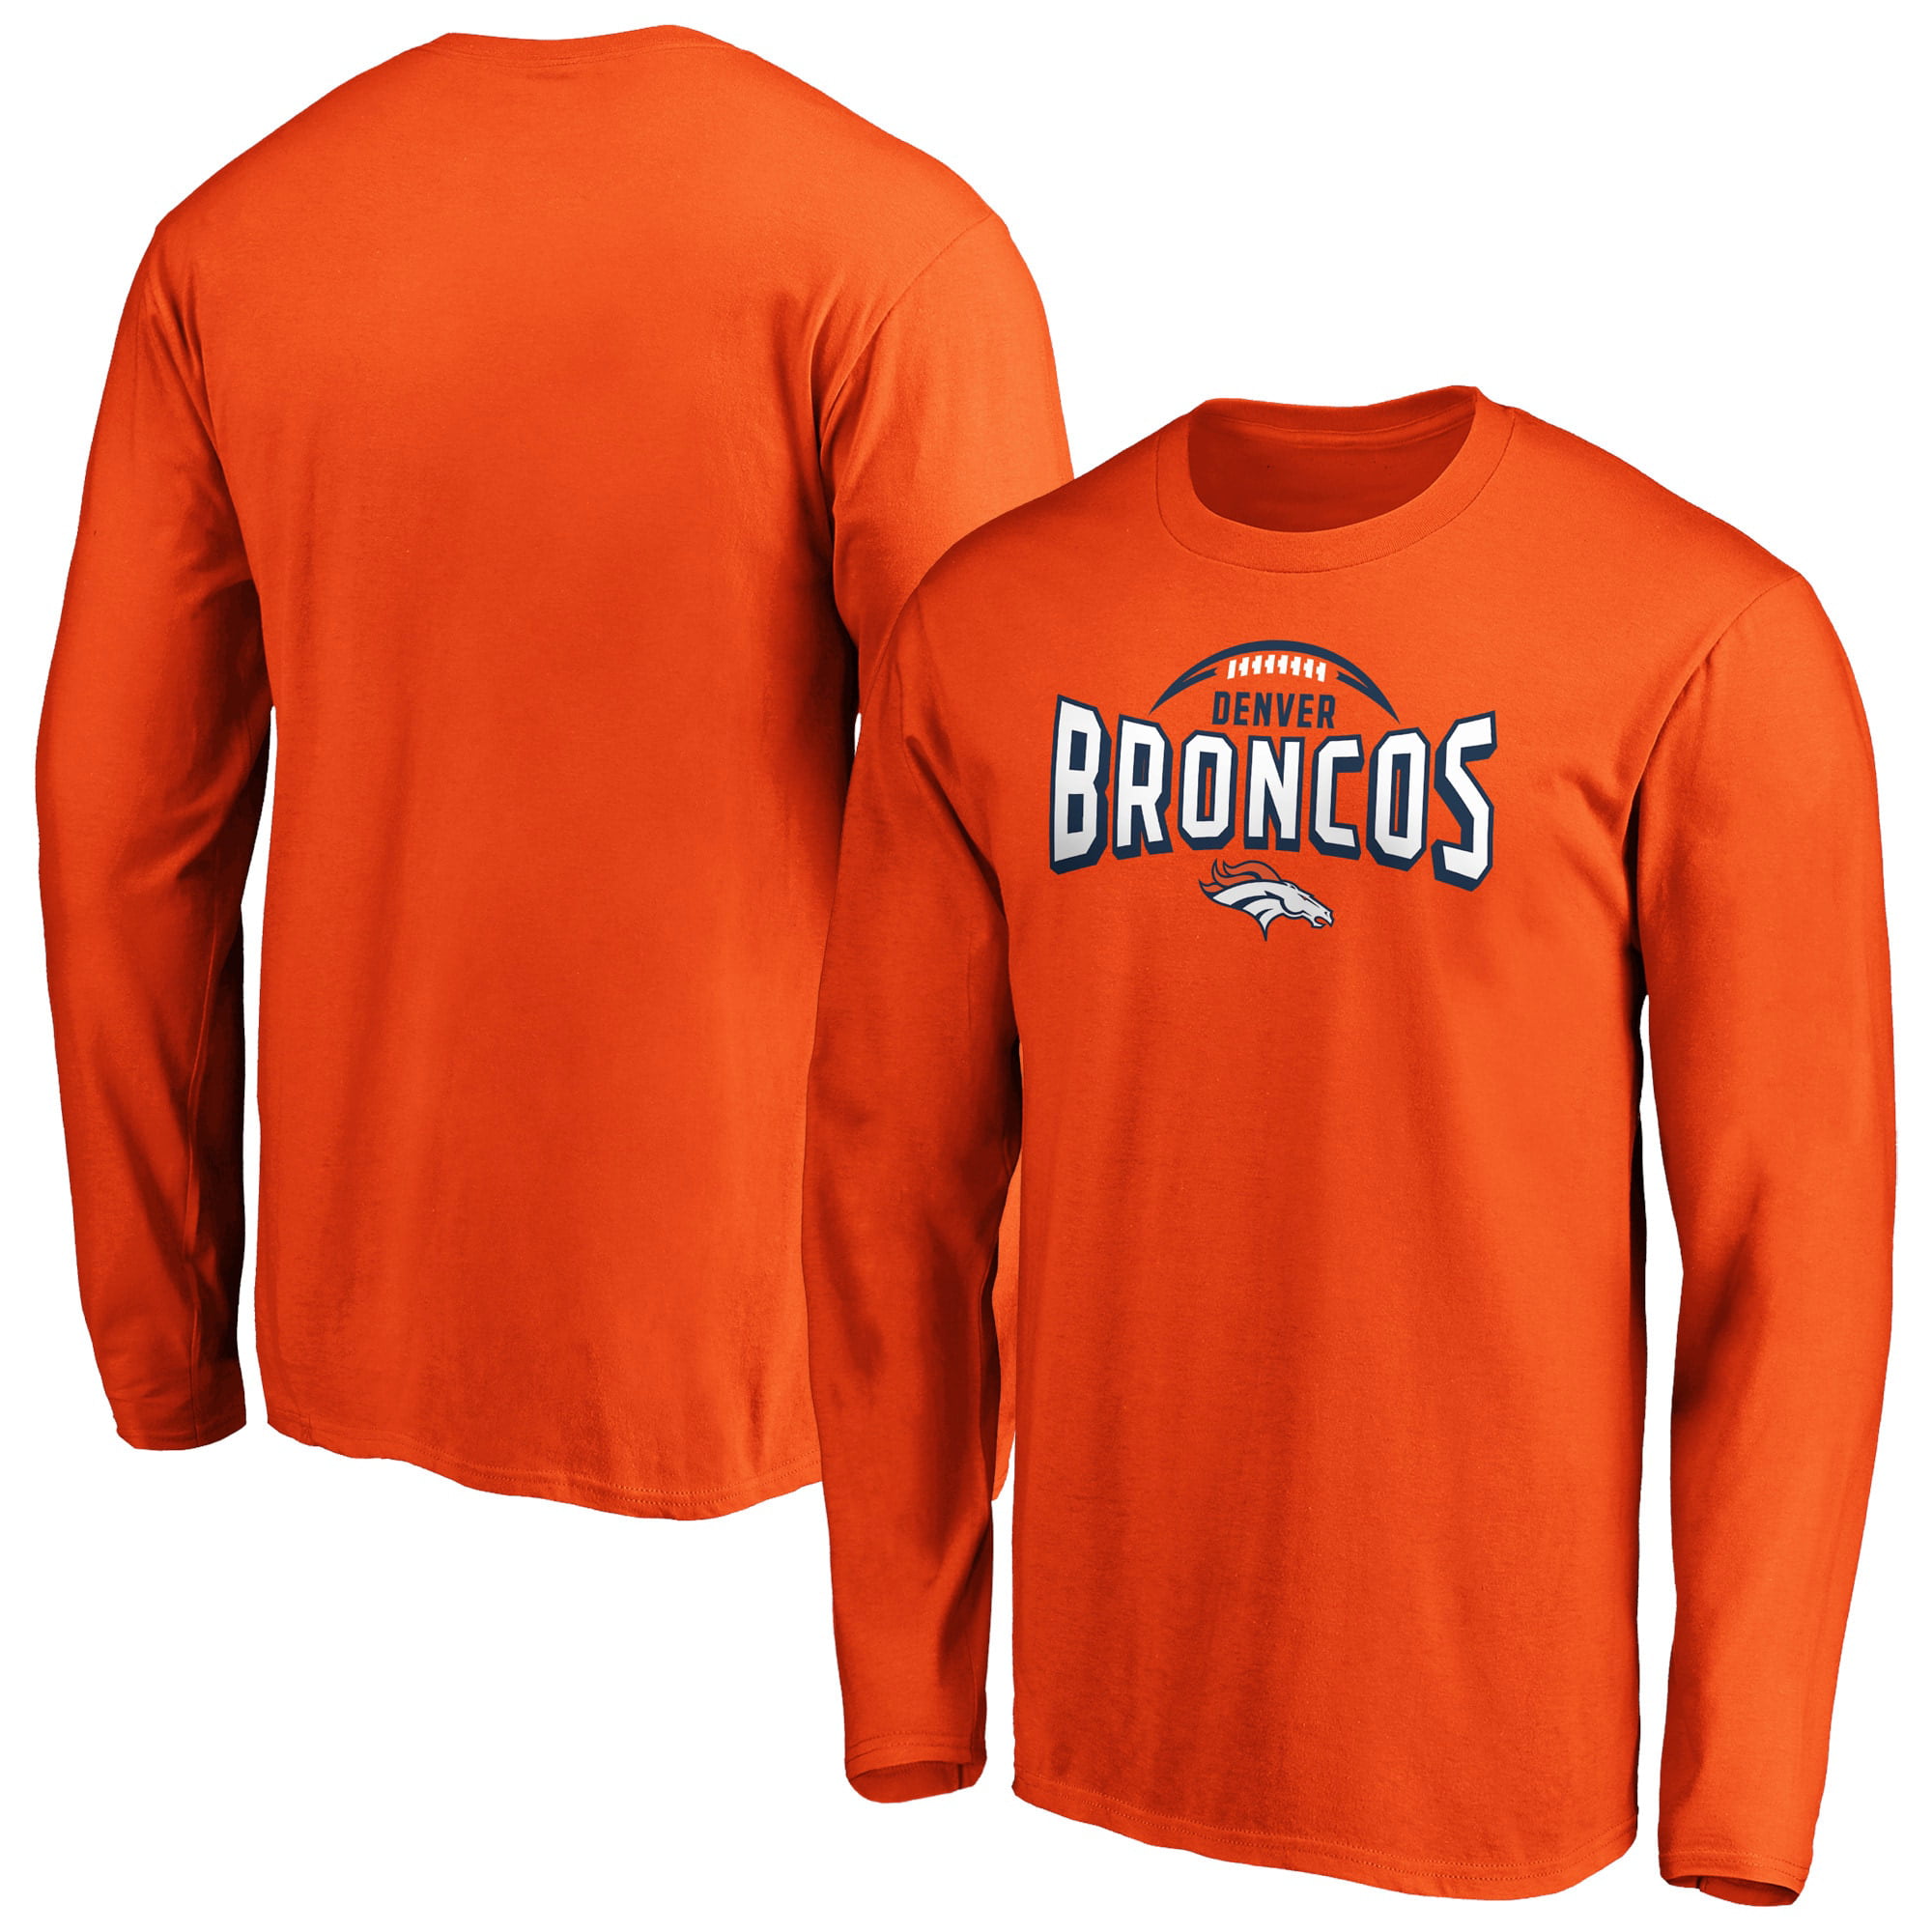 Denver Broncos Cut And Sew Long Sleeve T-Shirt Orange Mens Crew Neck 